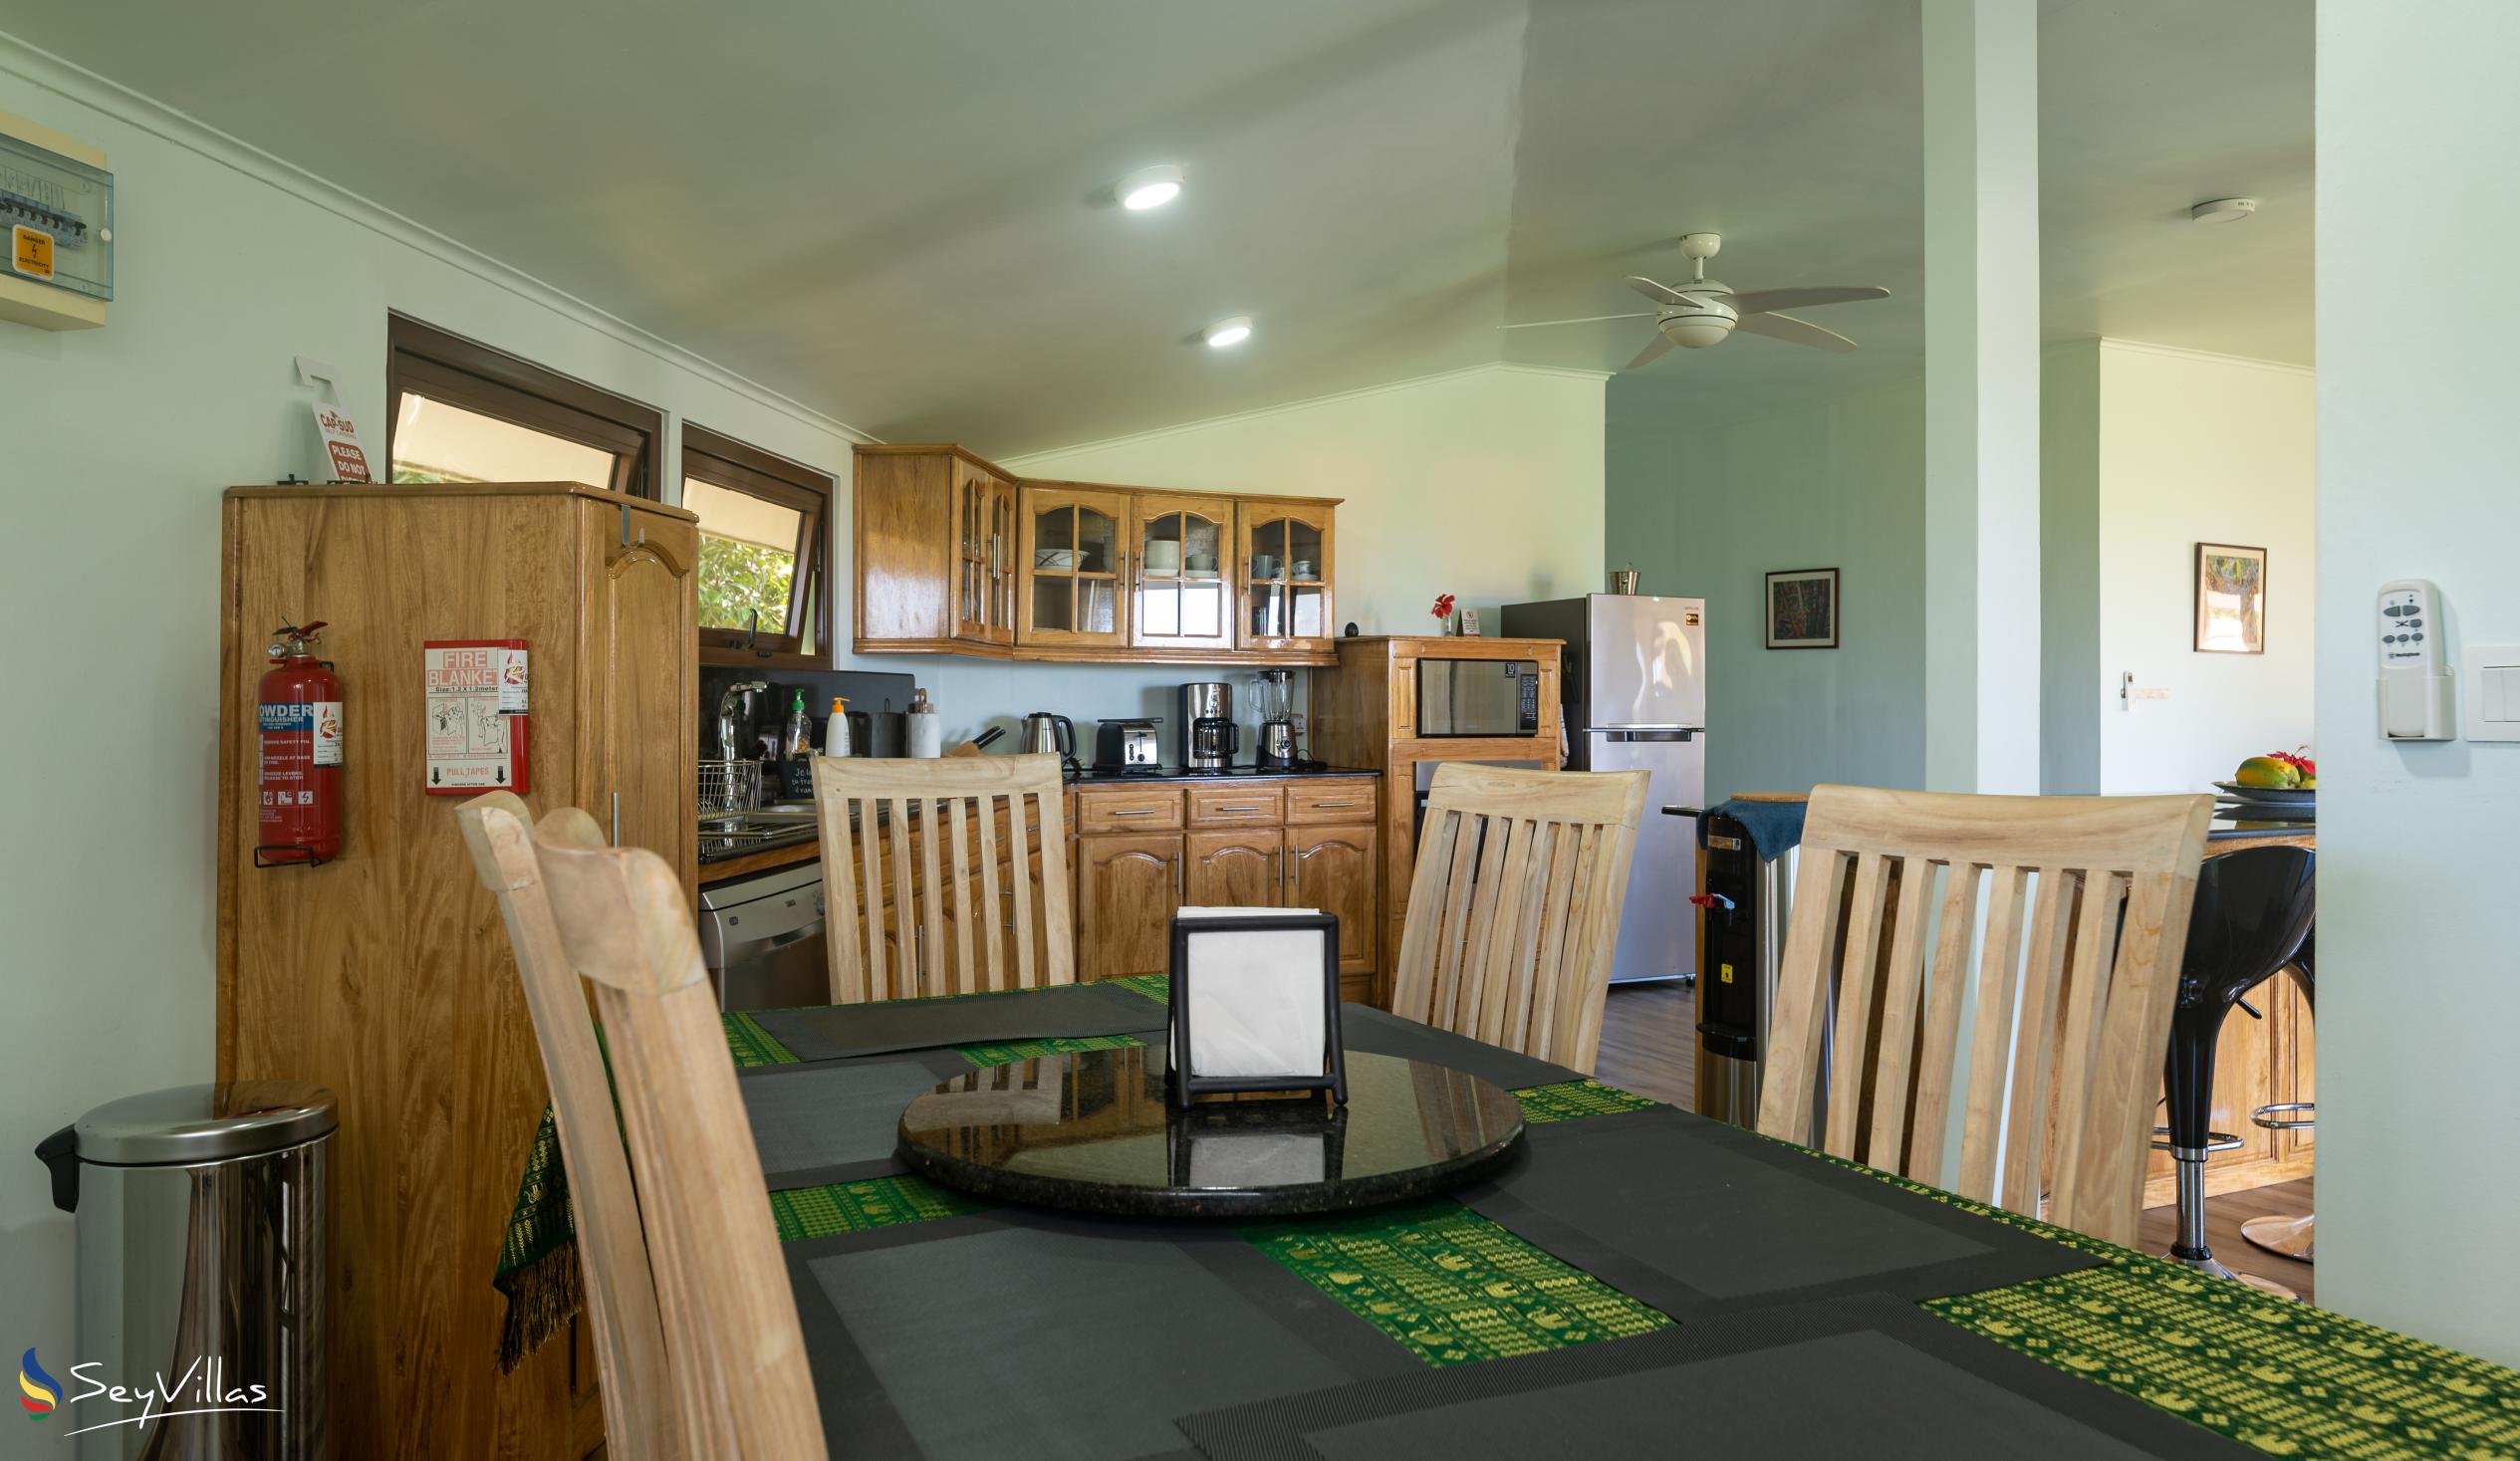 Photo 65: Cap-Sud Self Catering - 3-Bedroom Apartment - Mahé (Seychelles)